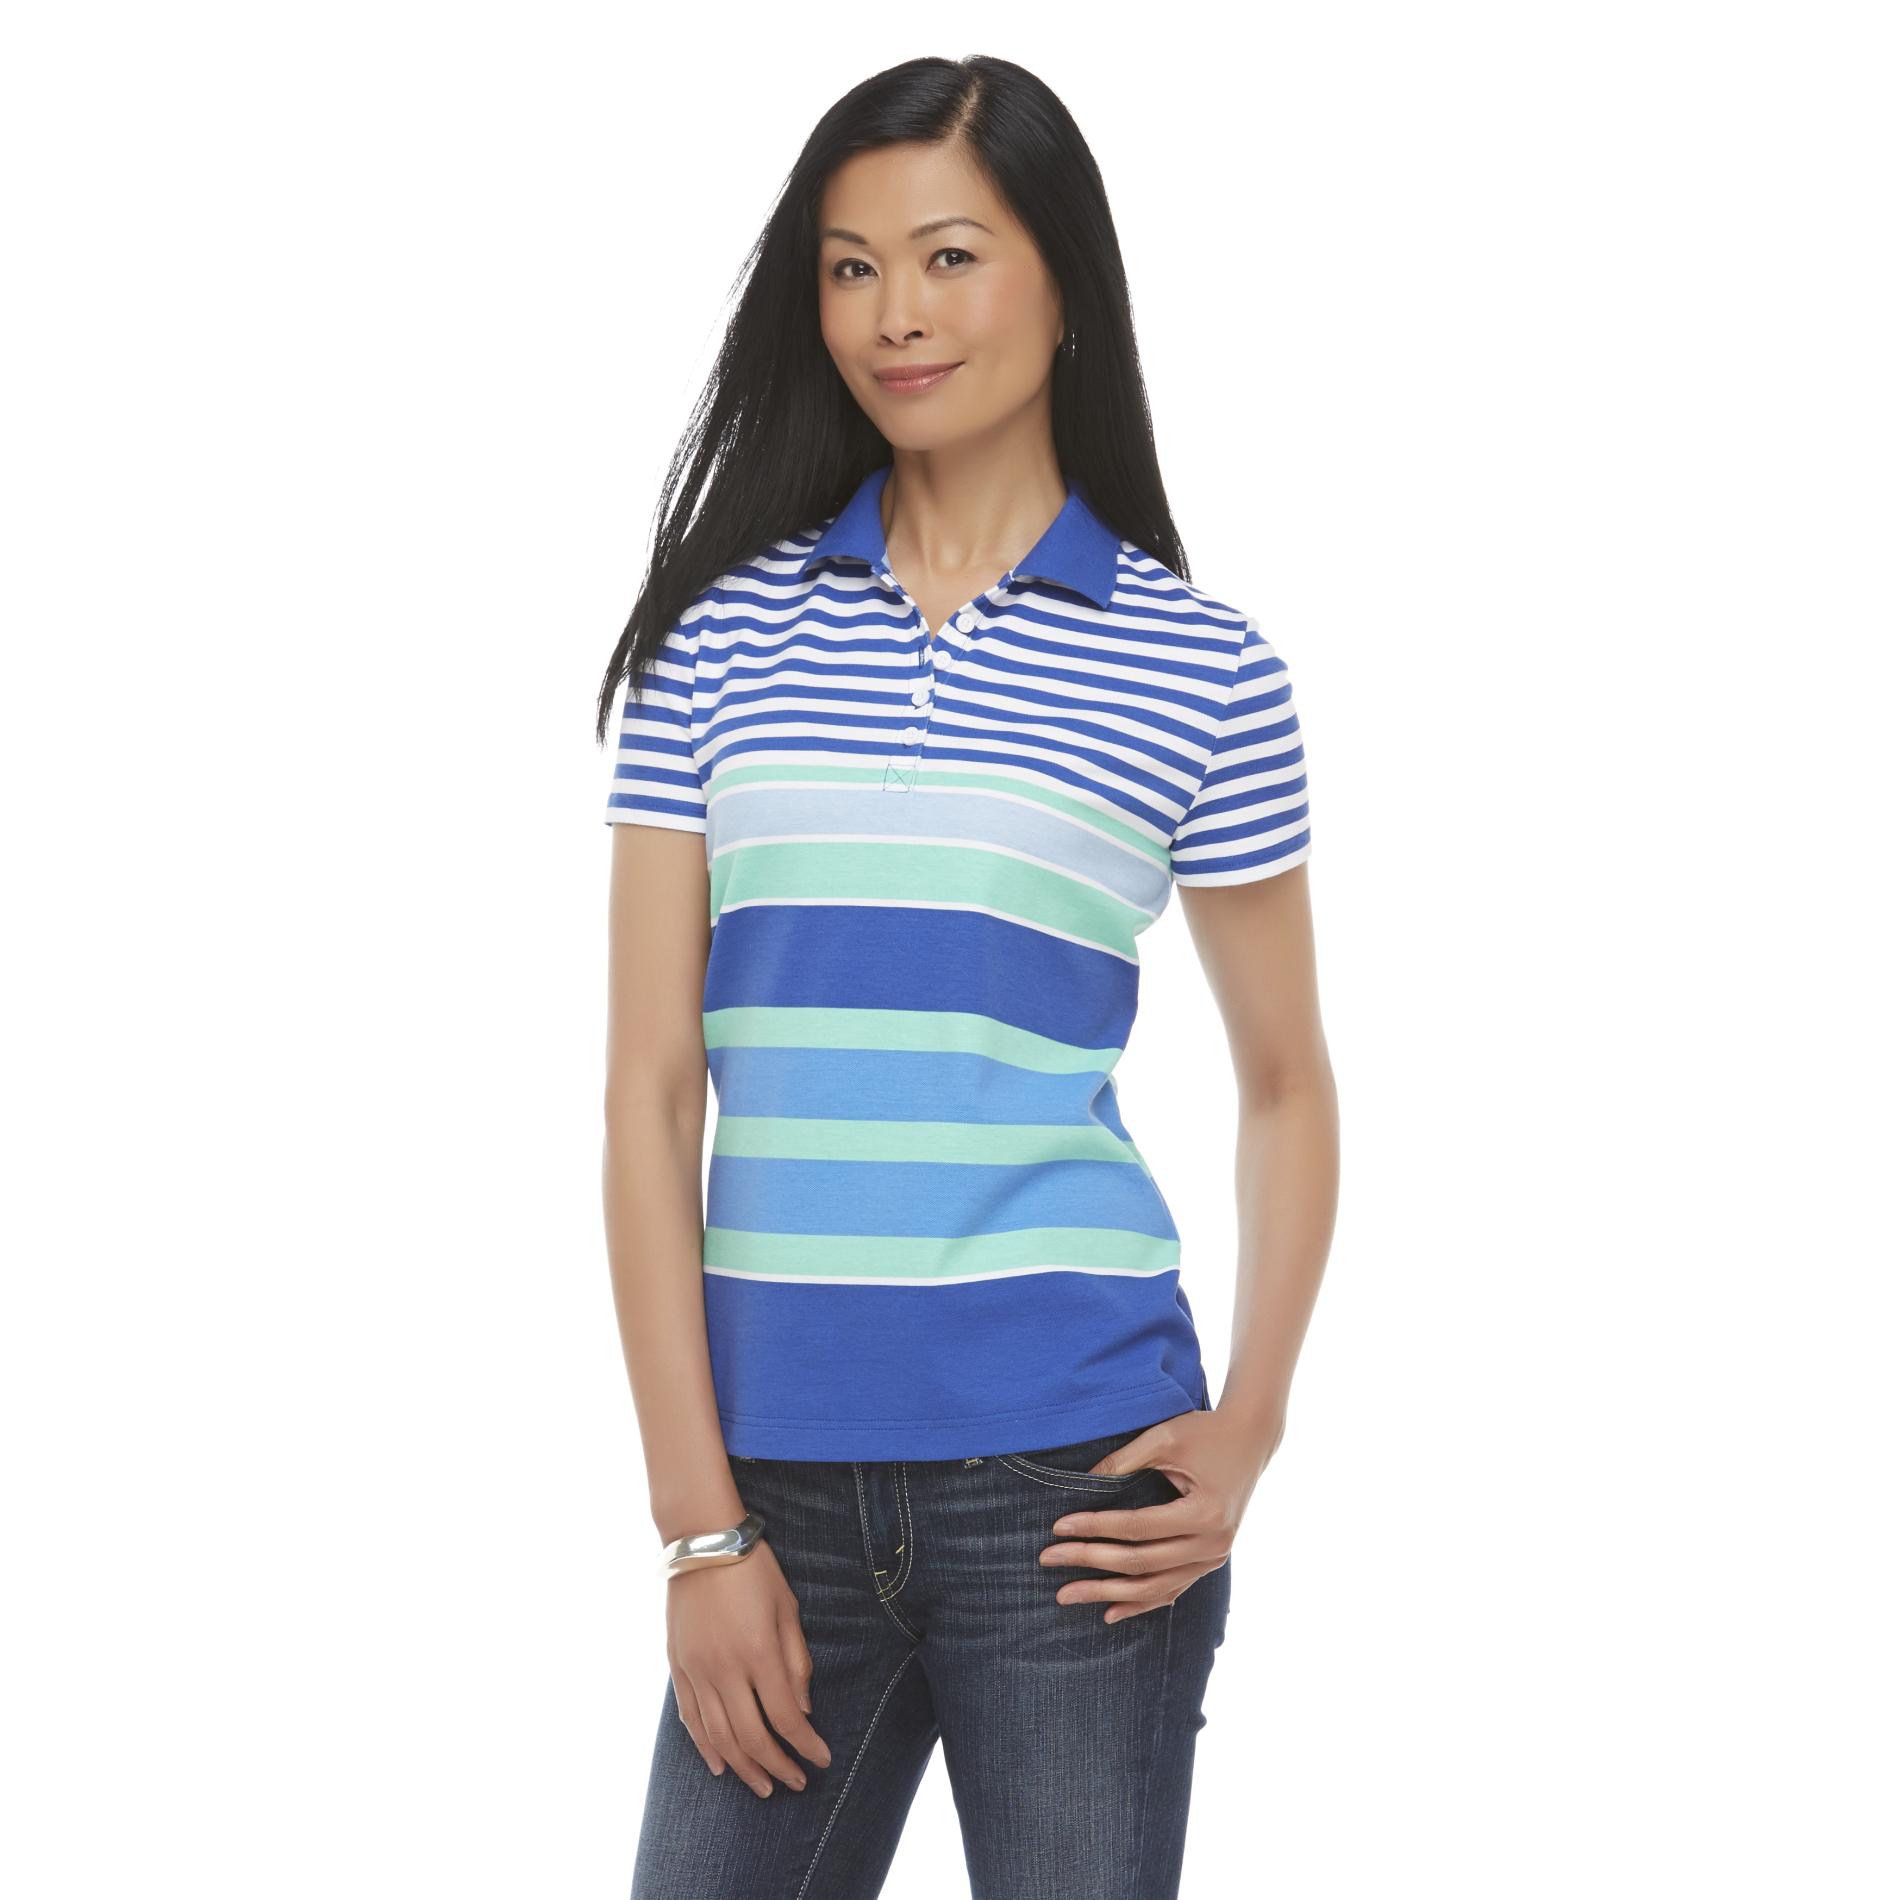 Basic Editions Women's Polo Shirt - Striped